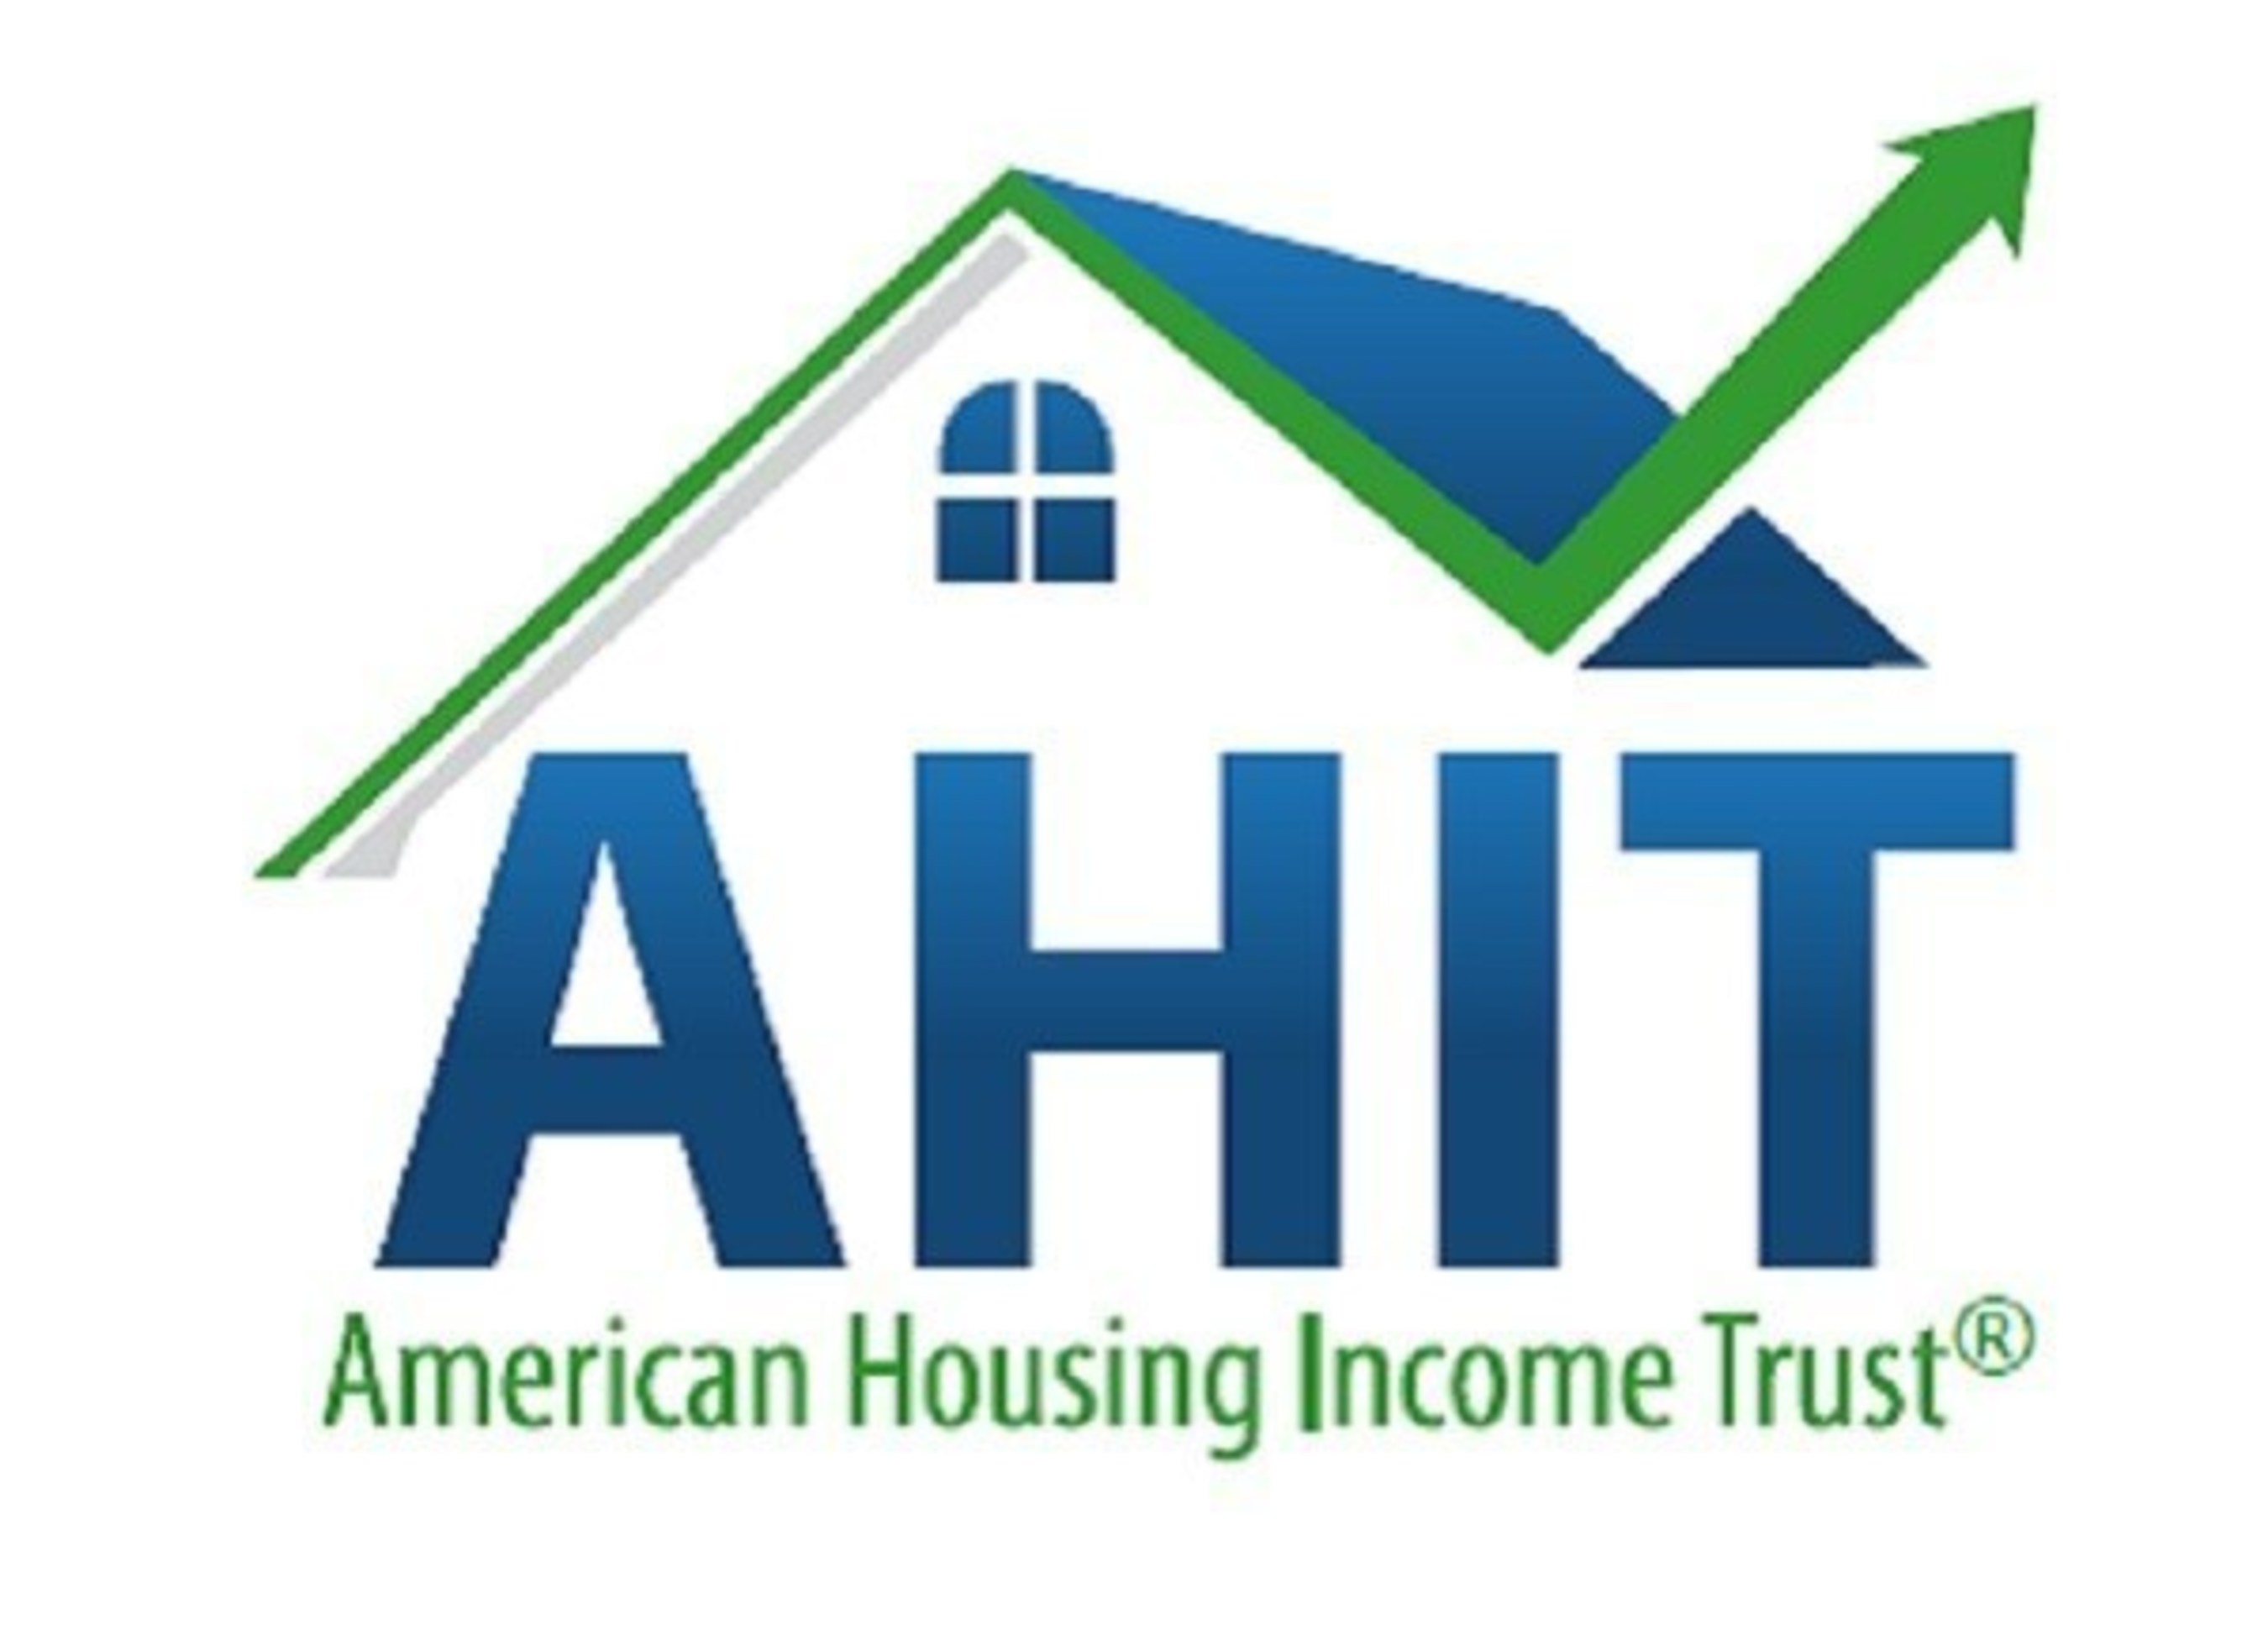 American Housing Income Trust (PRNewsFoto/American Housing Income Trust)